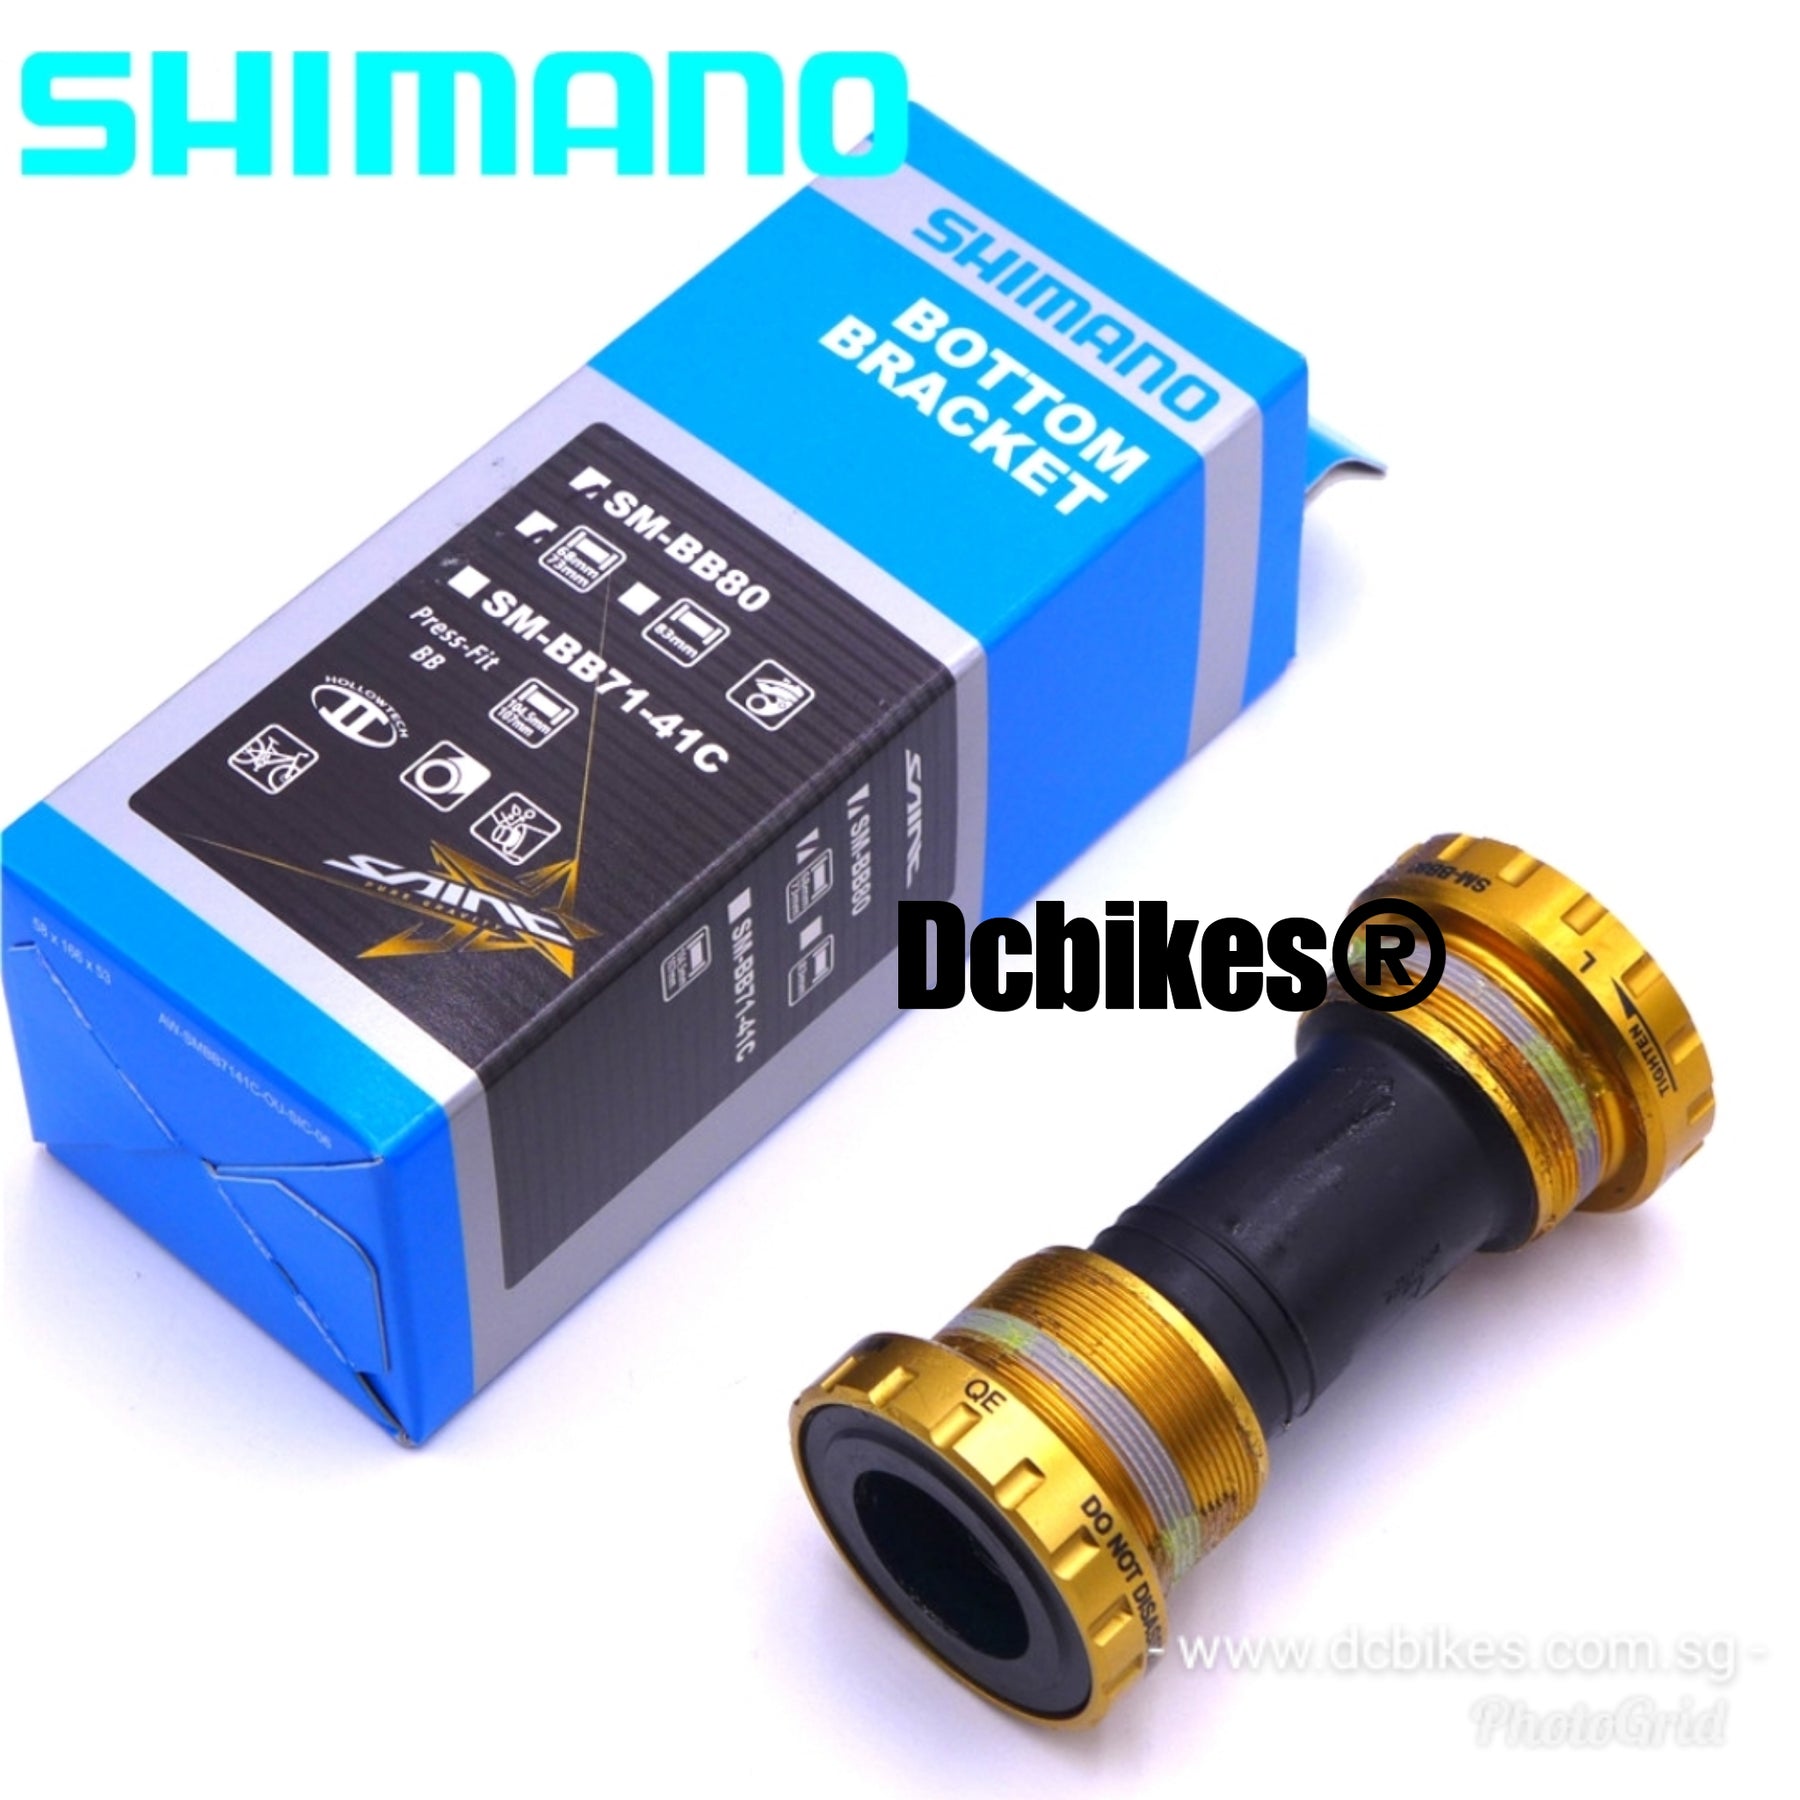 Shimano Ultegra SM-BB72-41B PressFit Bottom Bracket - Components